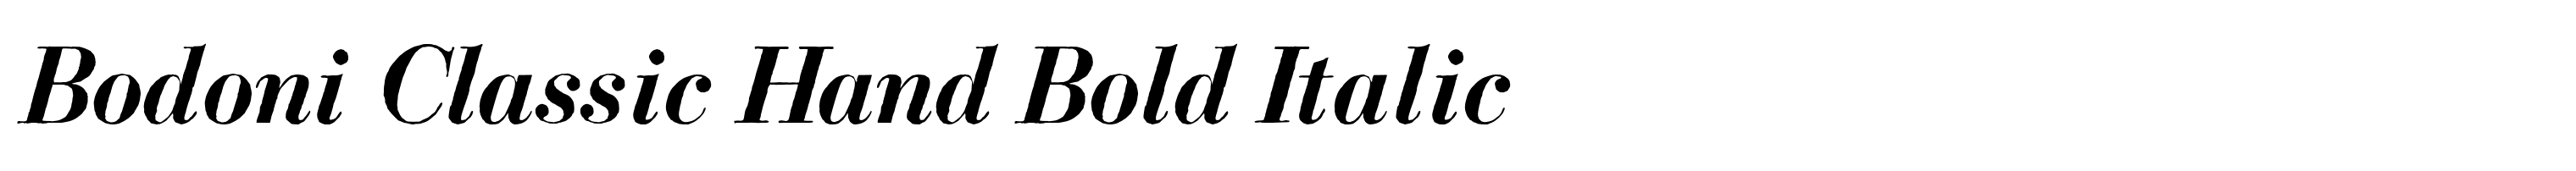 Bodoni Classic Hand Bold Italic